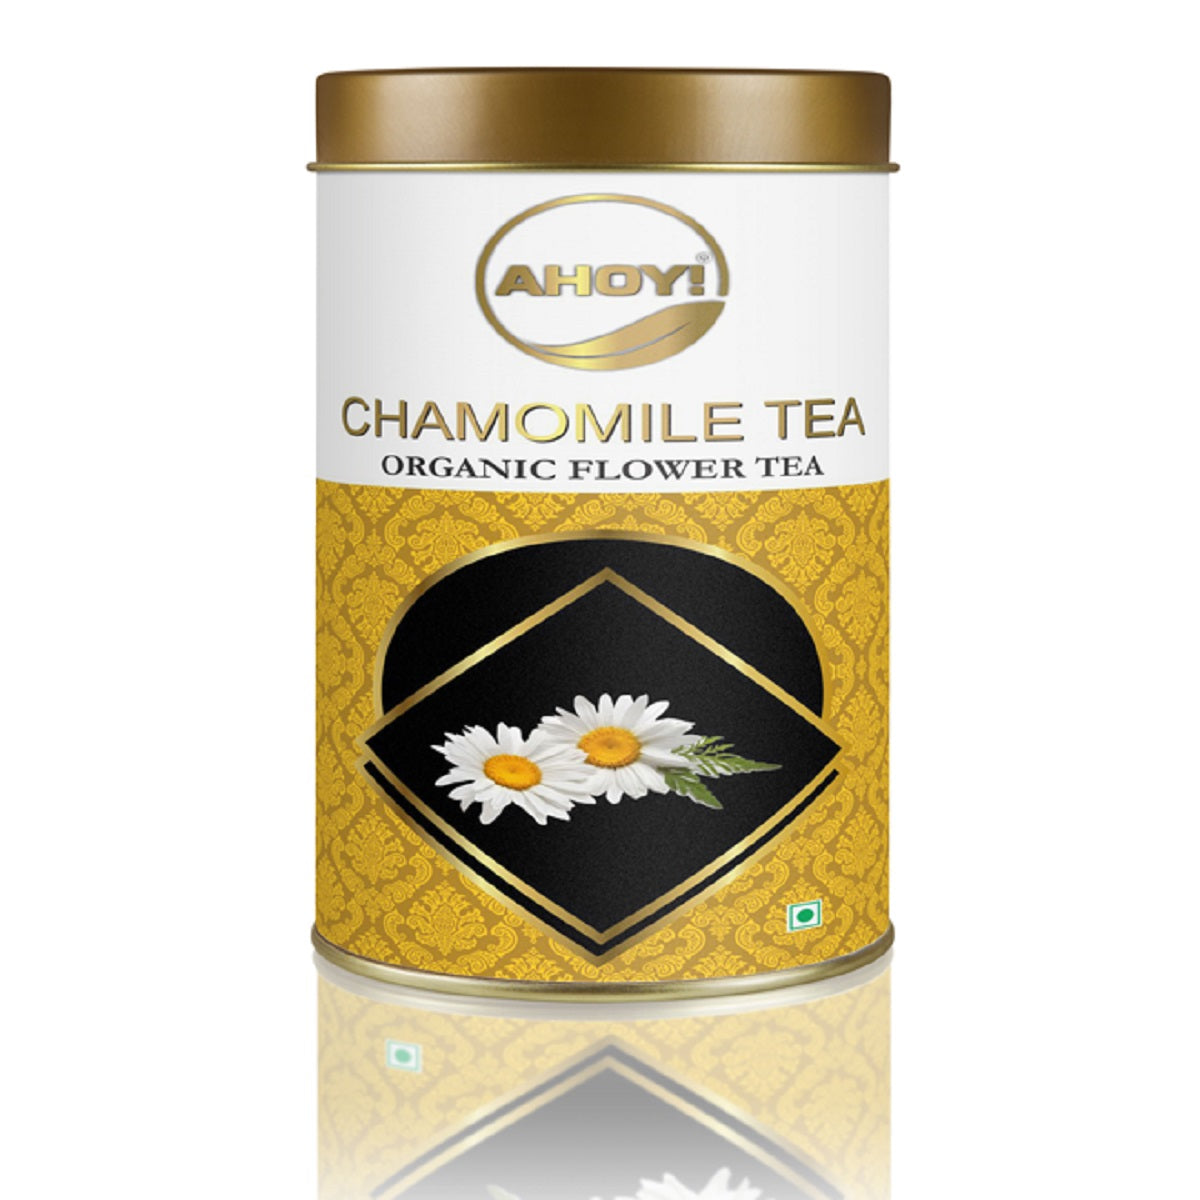 AHOY! Chamomile tea